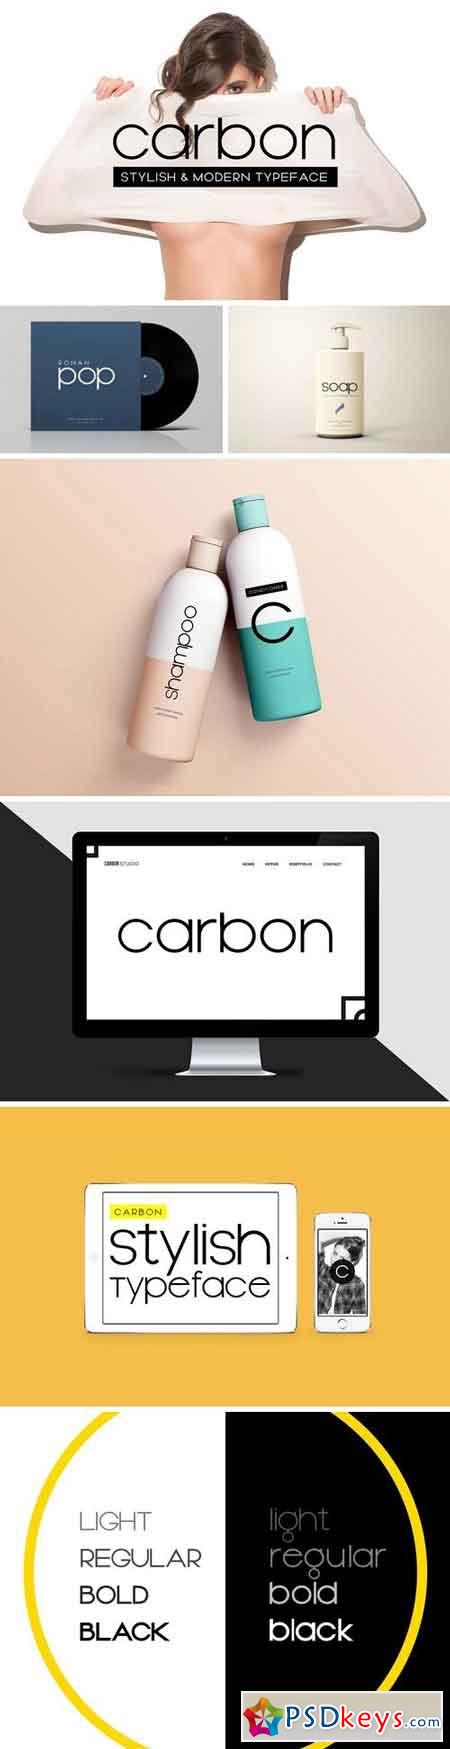 CARBON - Stylish Display Typeface 2801471